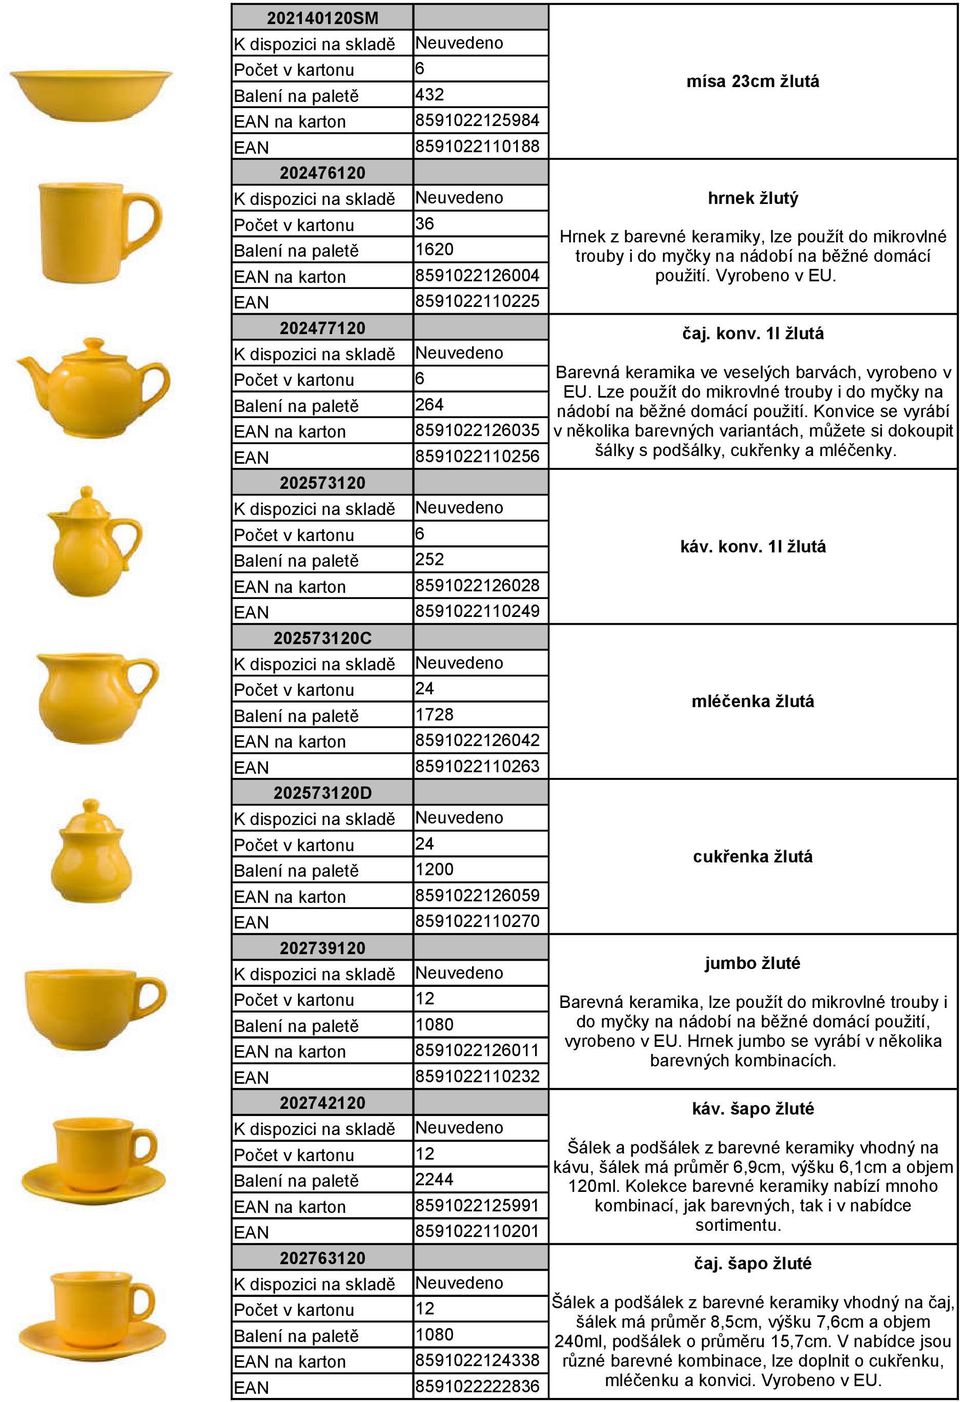 Hrnek z barevné keramiky, lze použít do mikrovlné trouby i do myčky na nádobí na běžné domácí použití. Vyrobeno v EU. čaj. konv. 1l žlutá Barevná keramika ve veselých barvách, vyrobeno v EU.